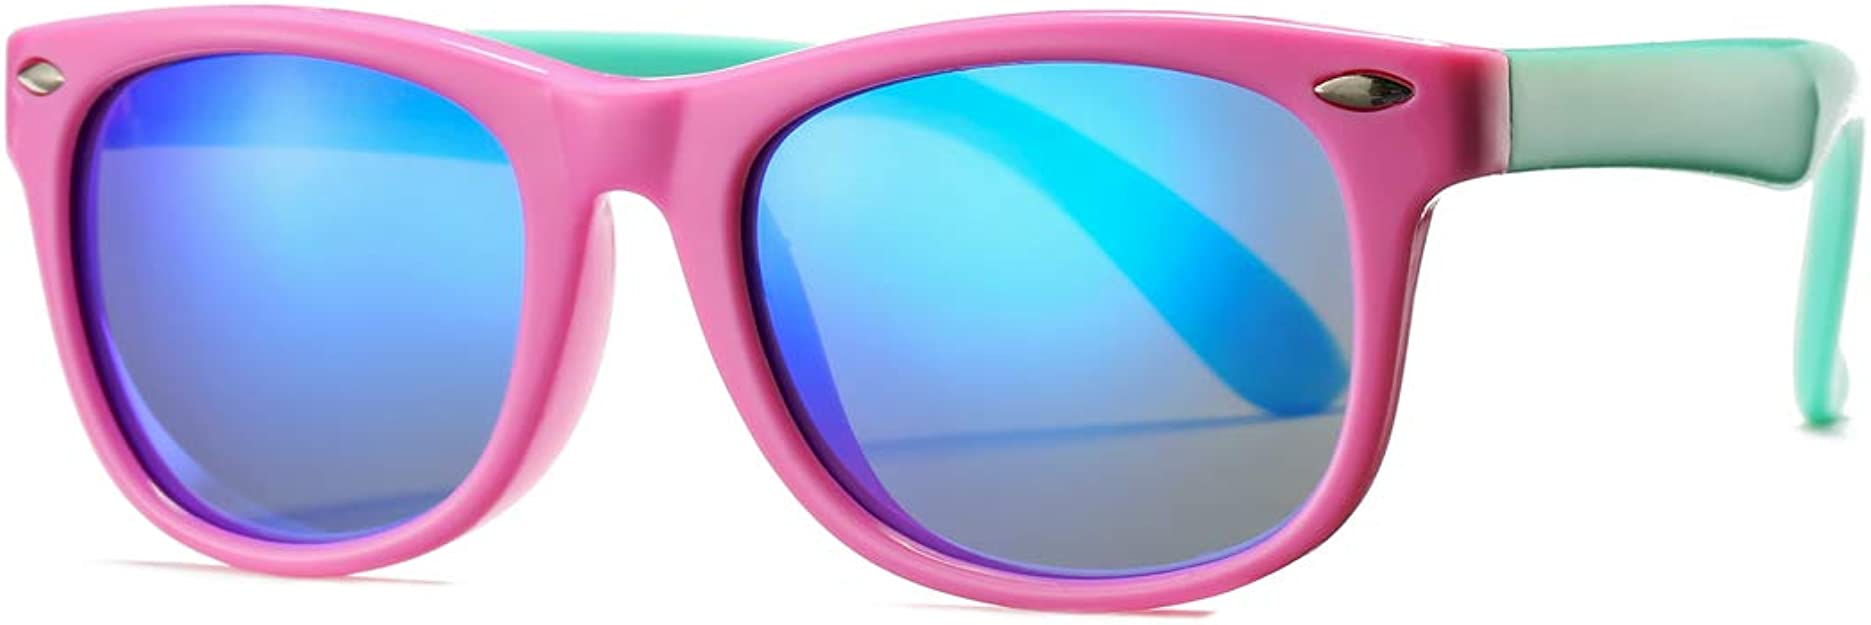 Kids Colorful Polarized Sunglasses